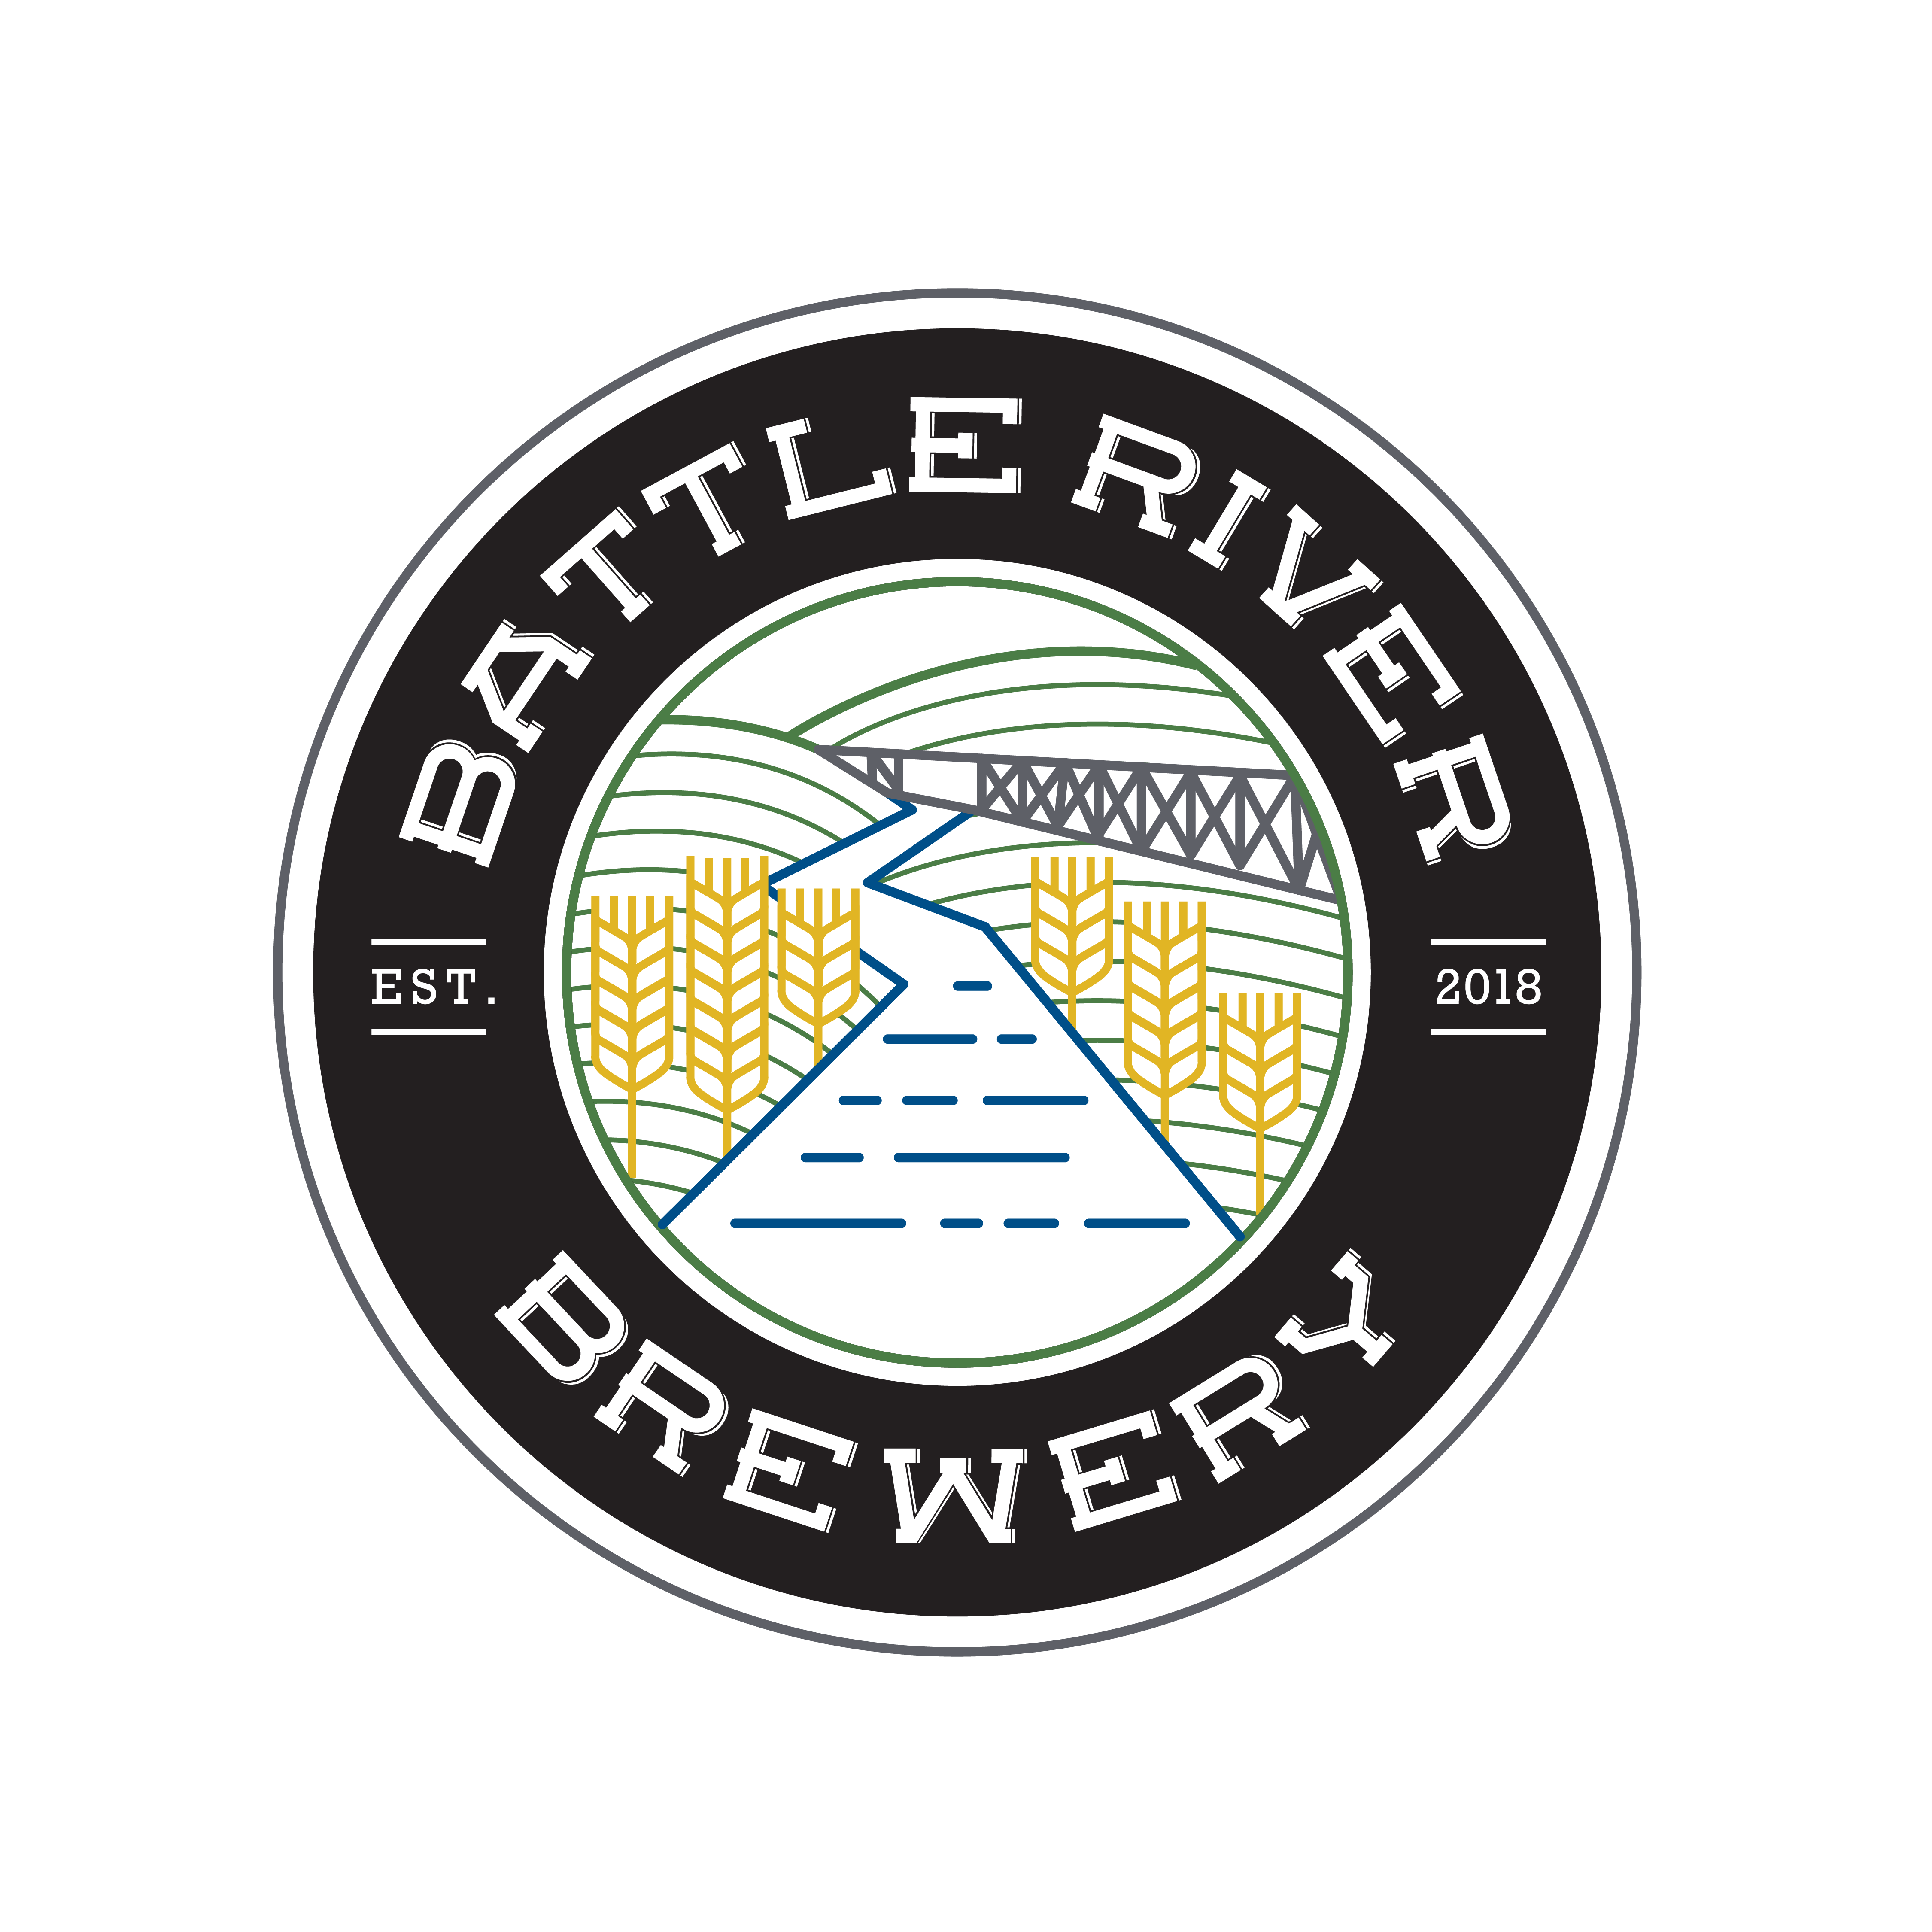 Battle River Brewery